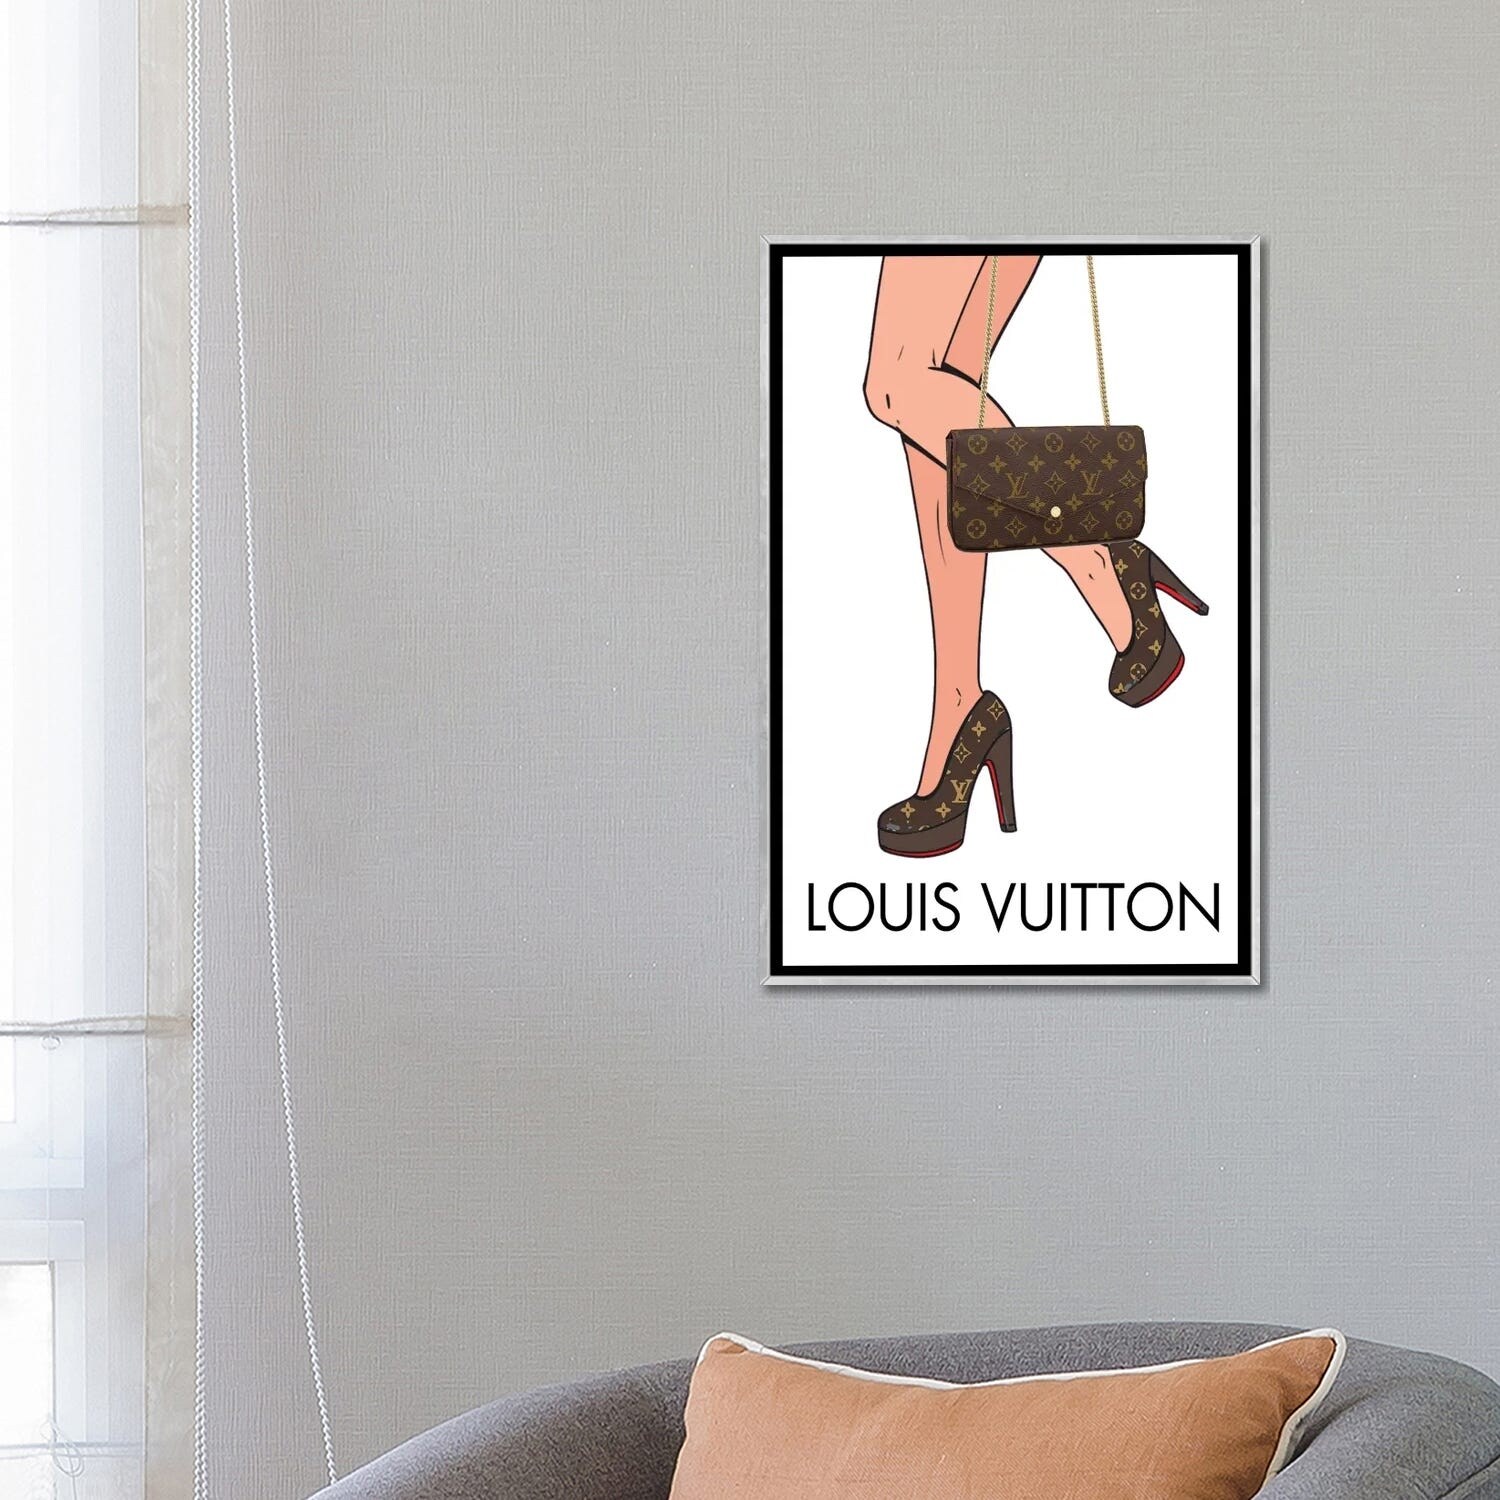 iCanvas Louis Vuitton Black And White by Julie Schreiber - On